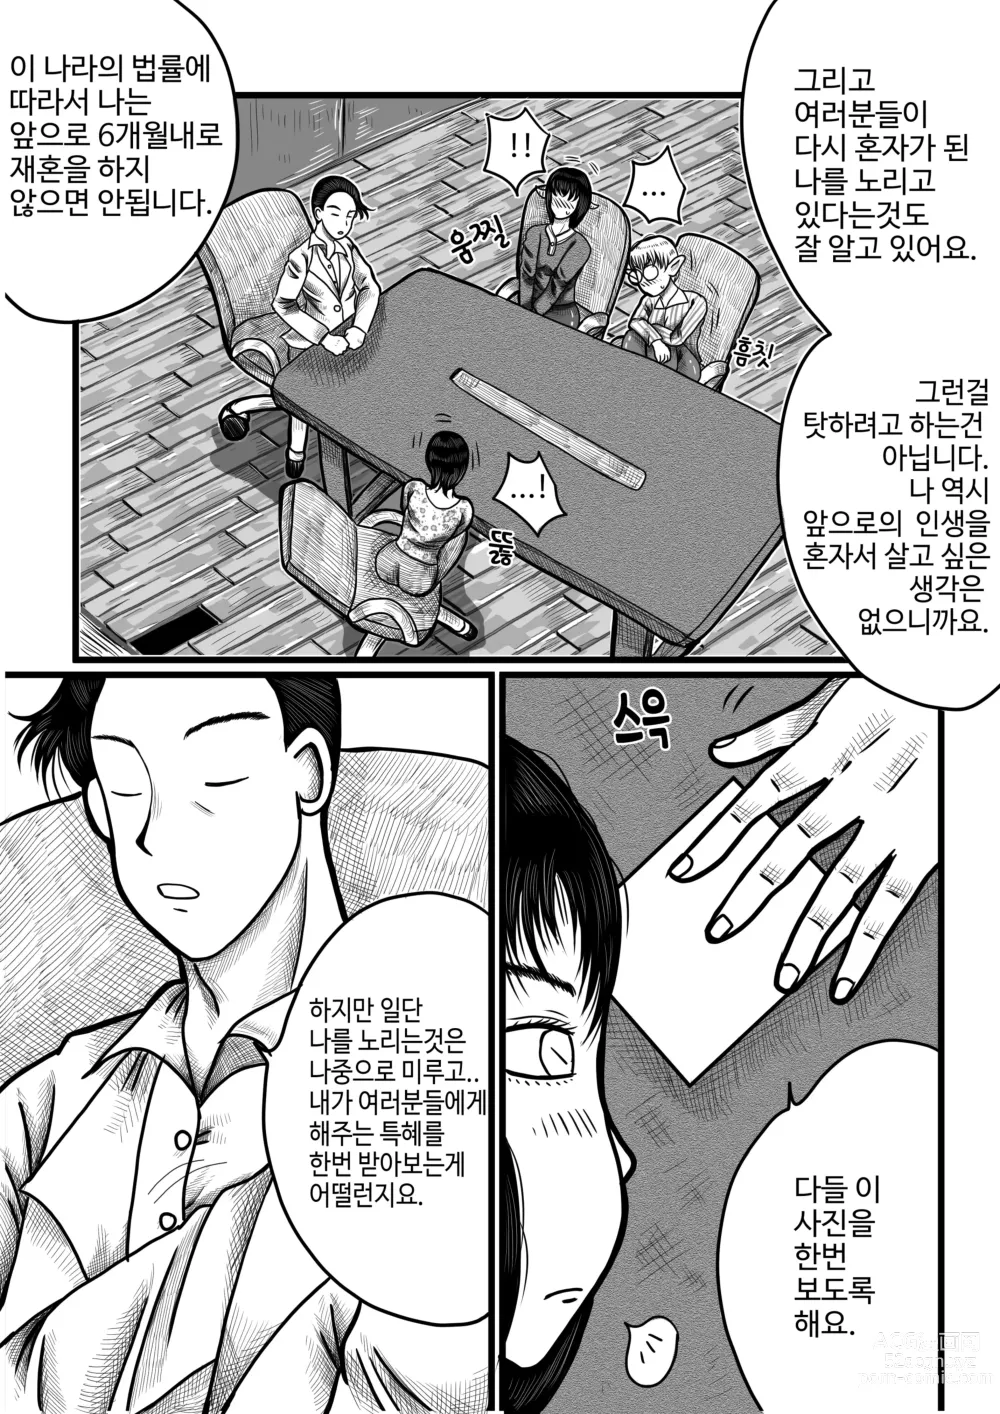 Page 5 of doujinshi 남녀의성비가1대290인몬무스세계